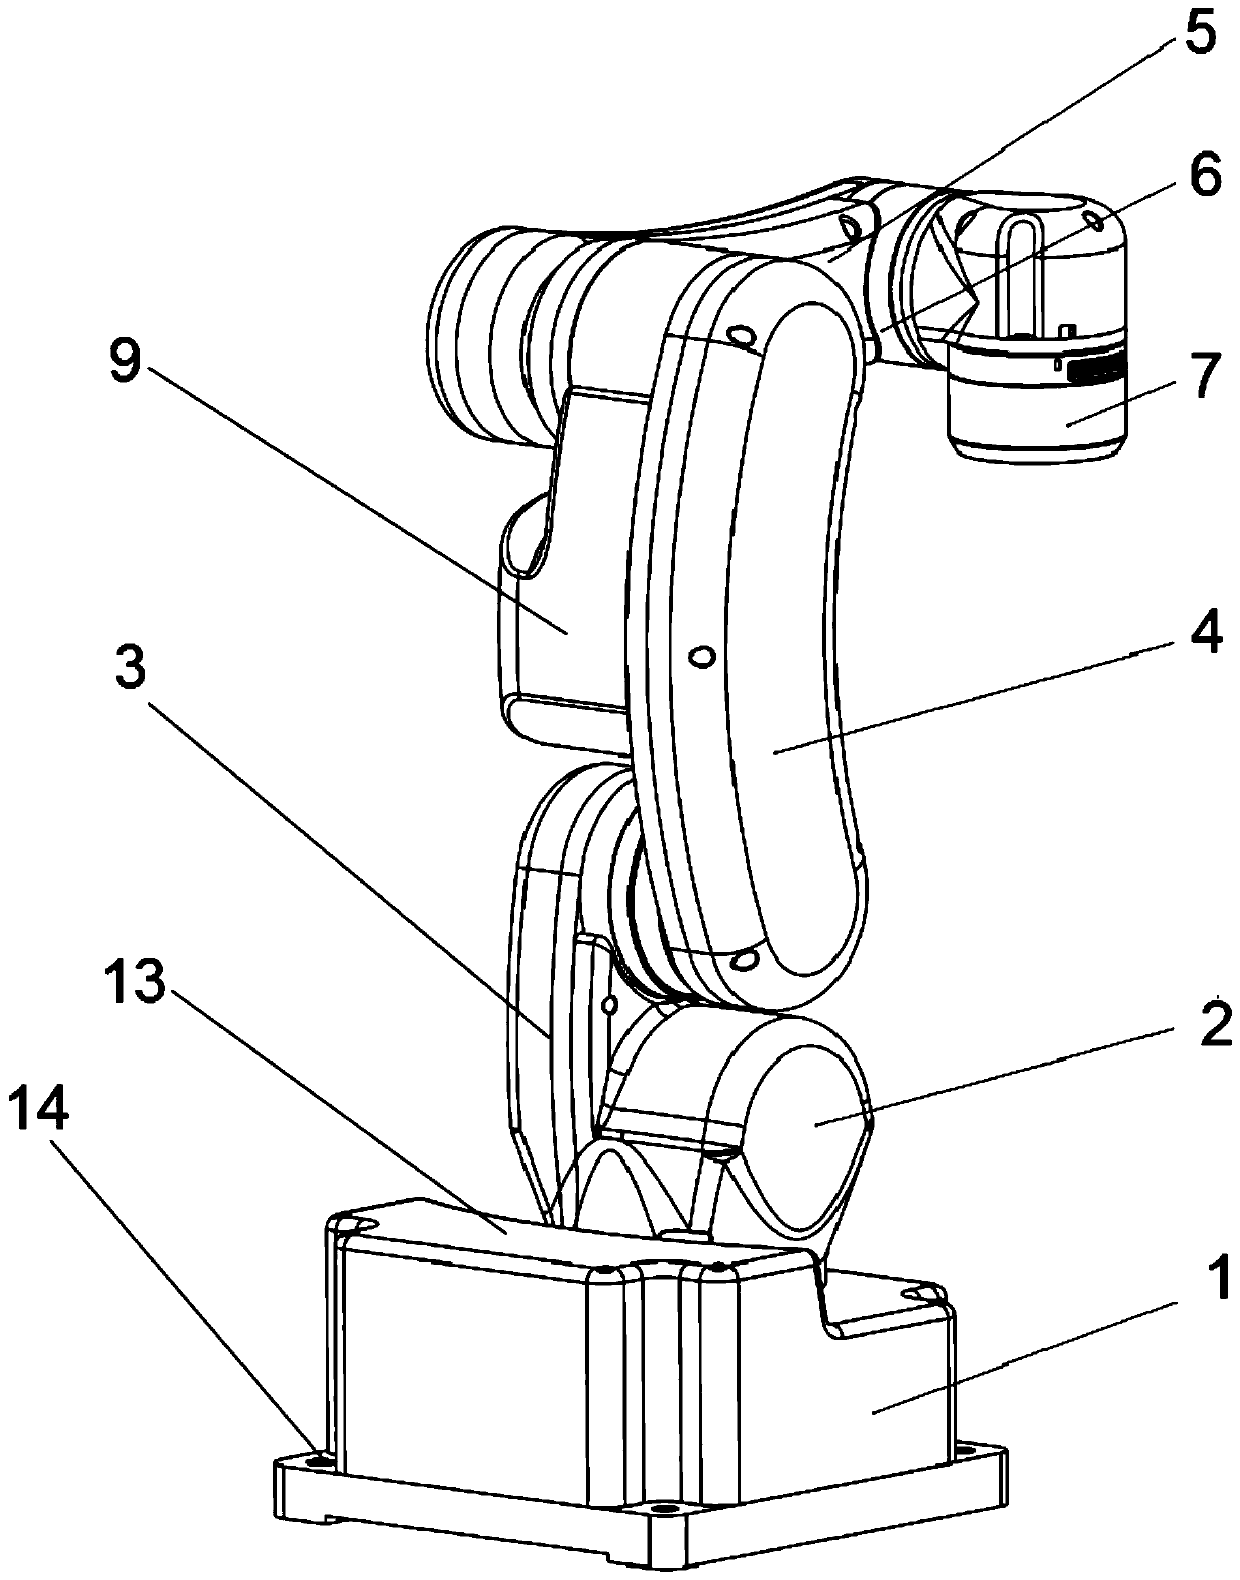 Five-joint carrying robot mechanism